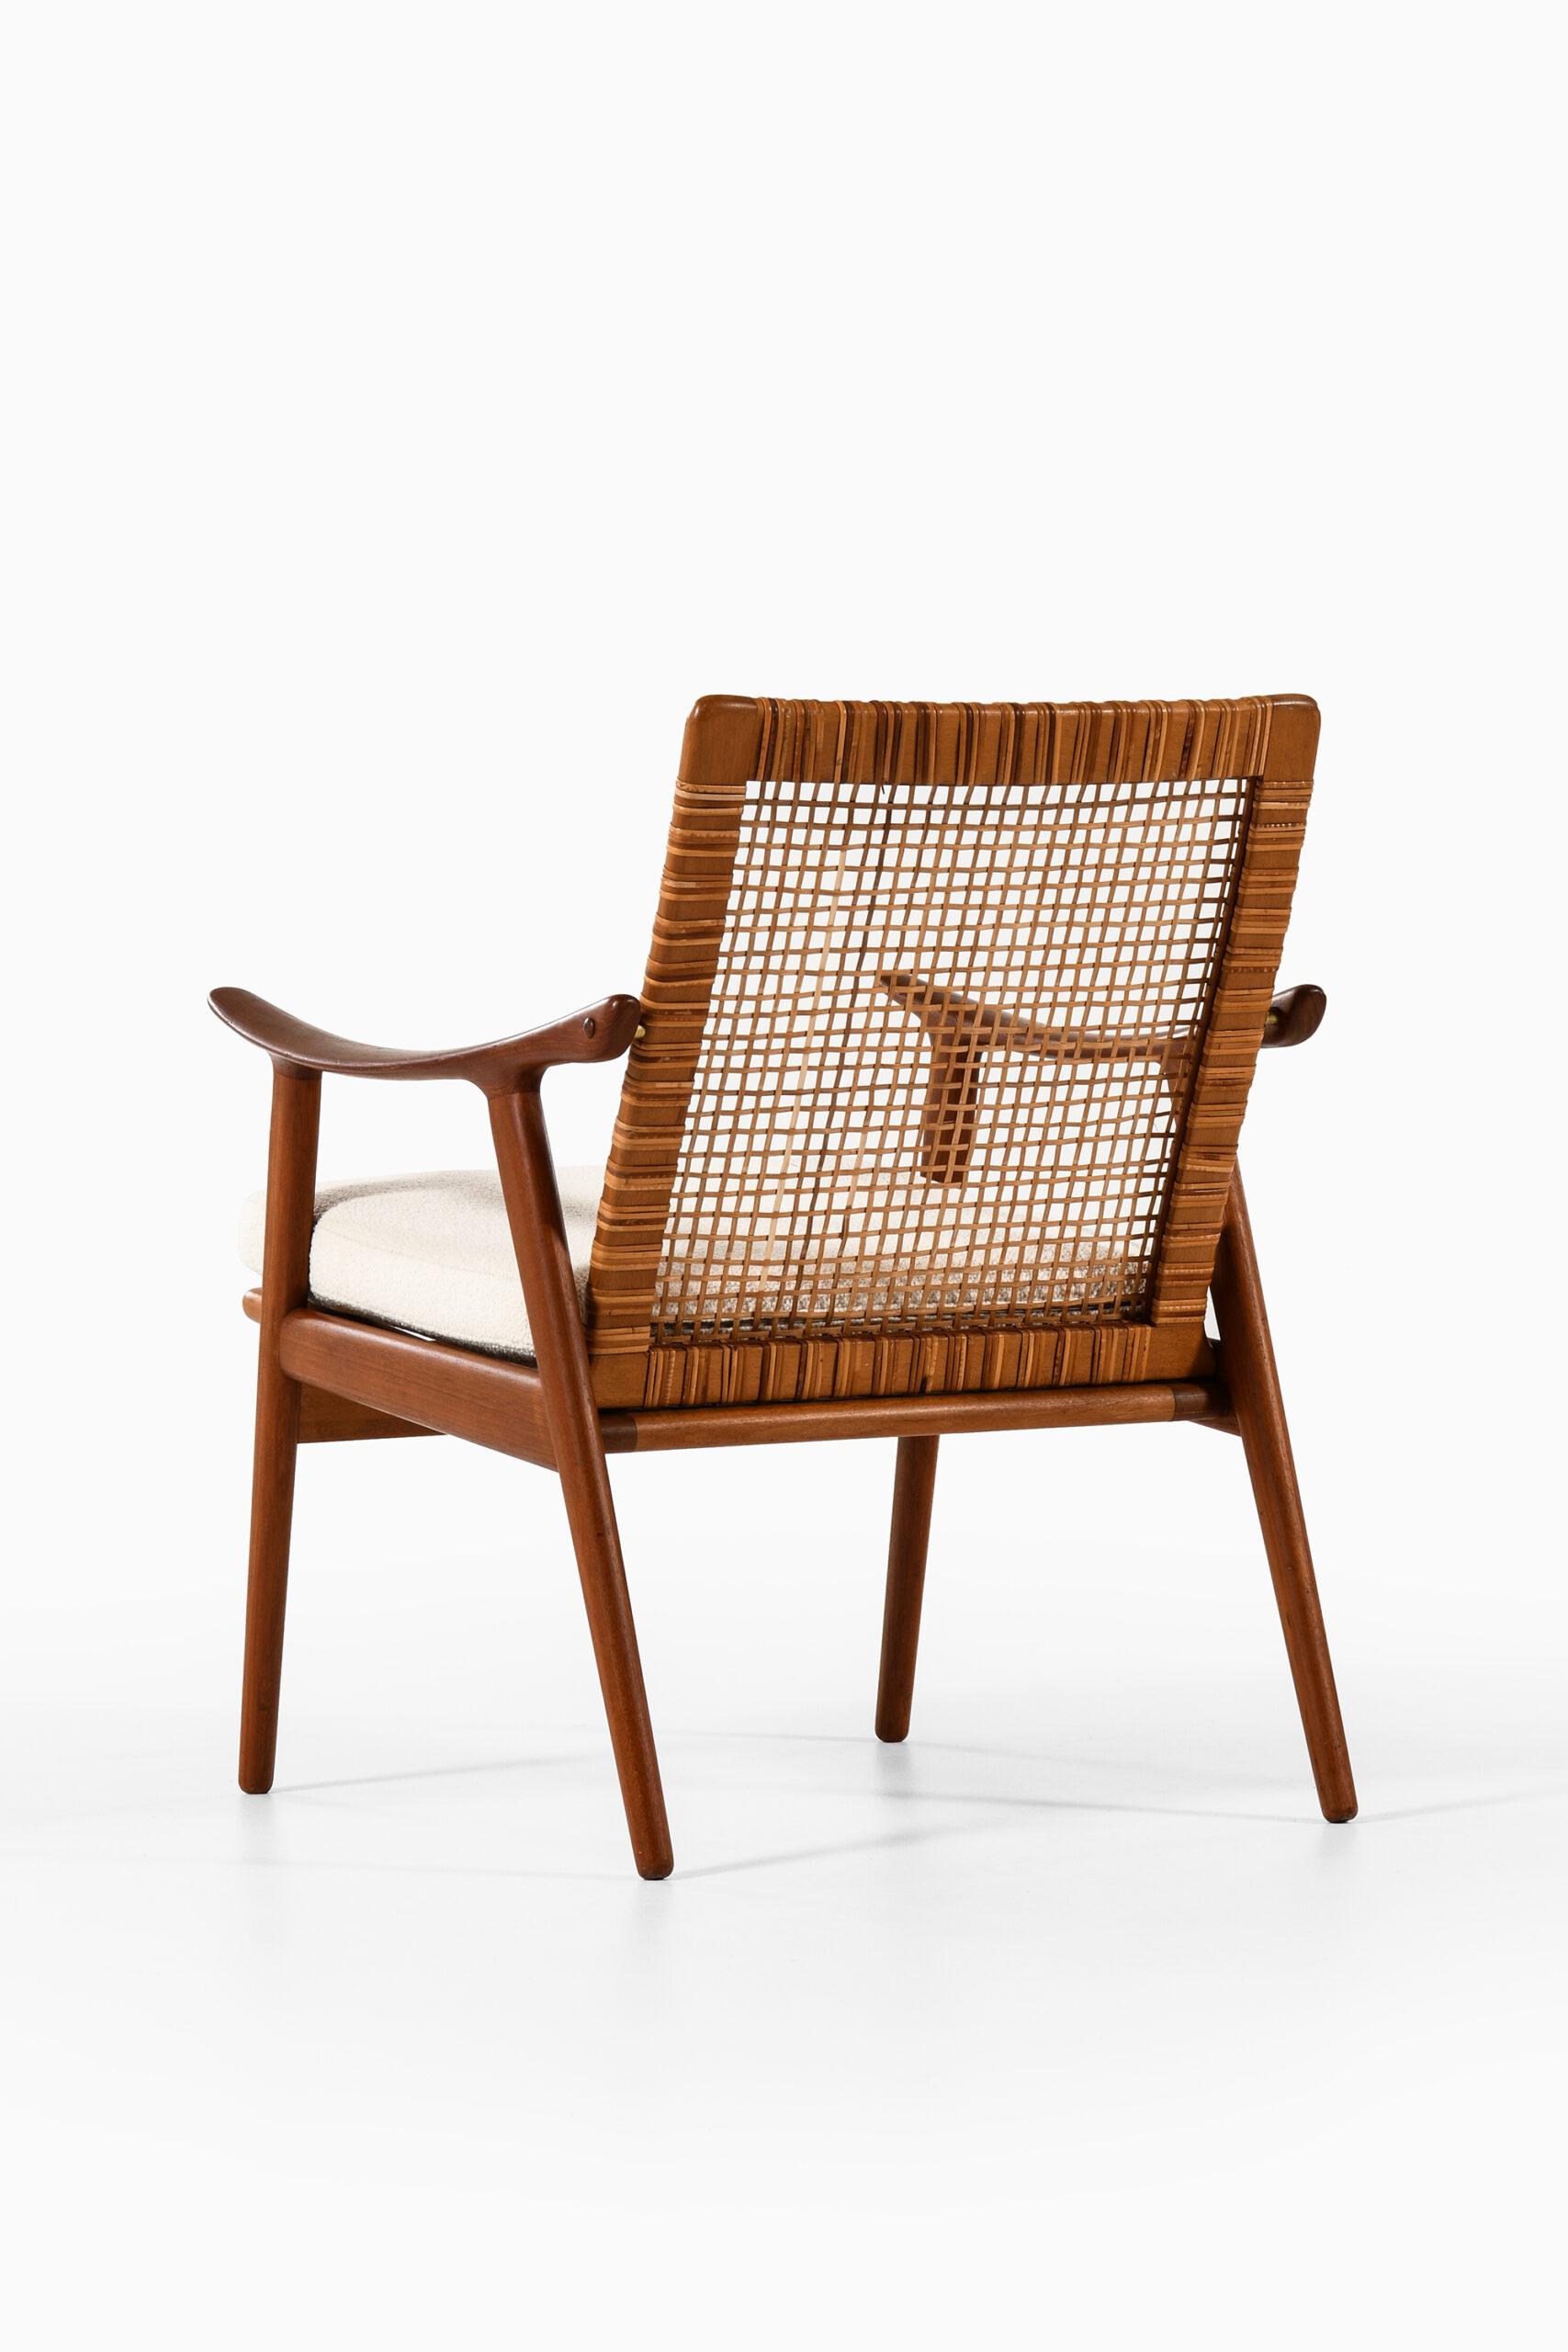 Bouclé Fredrik Kayser Easy Chair Produced by Vatne Møbler For Sale